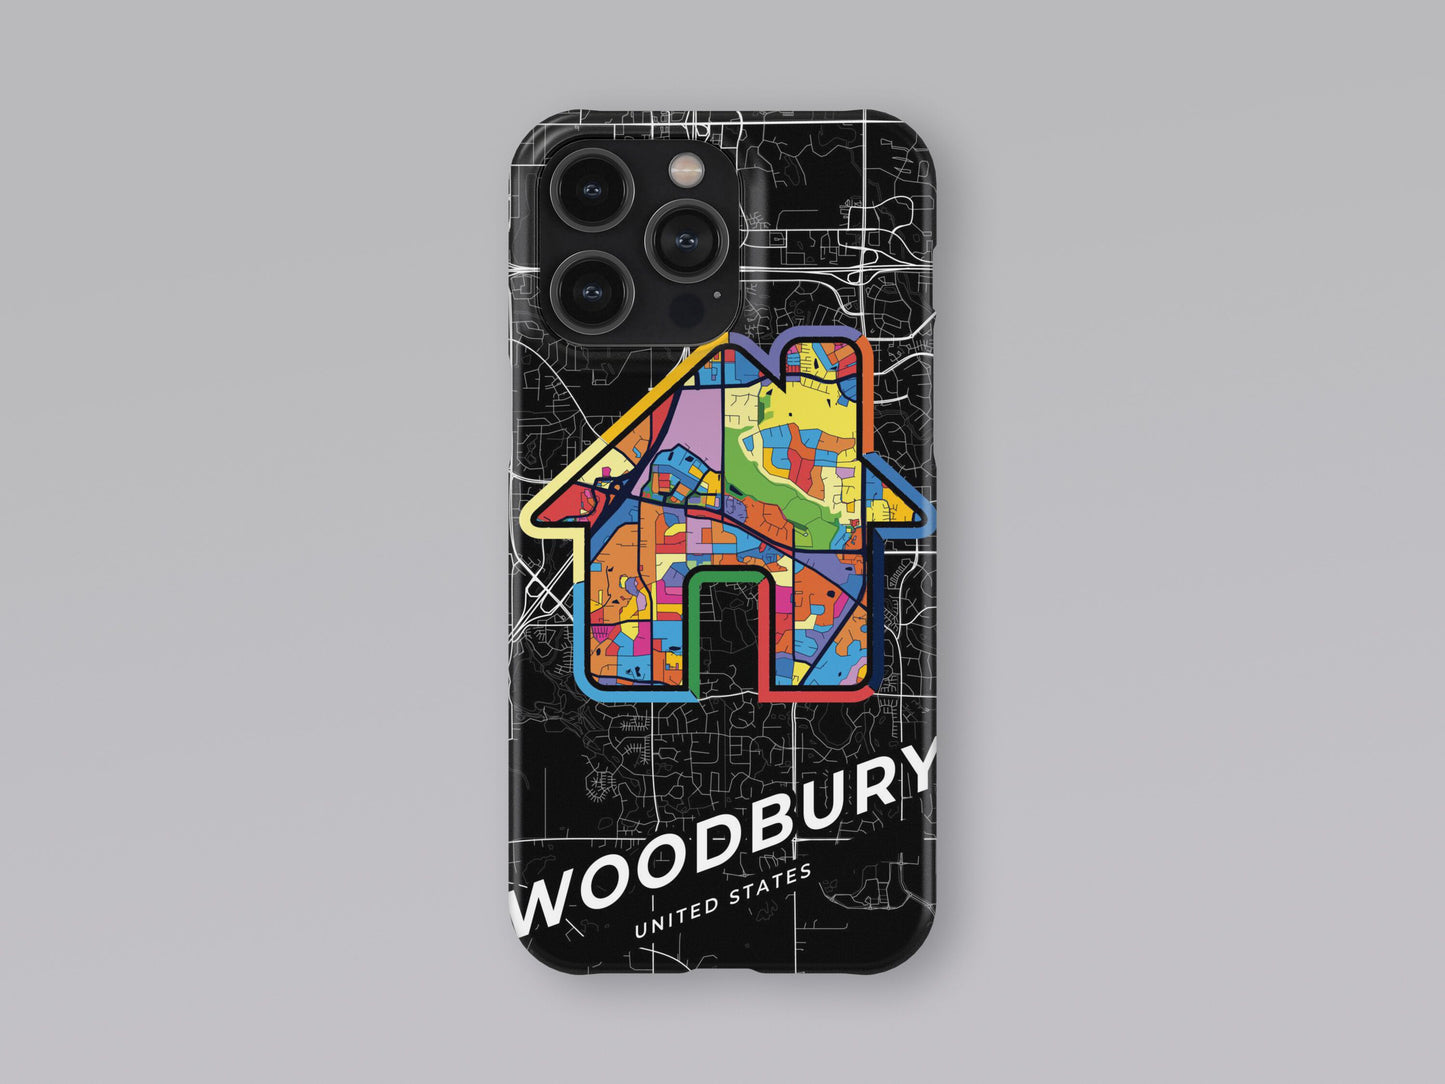 Woodbury Minnesota slim phone case with colorful icon 3